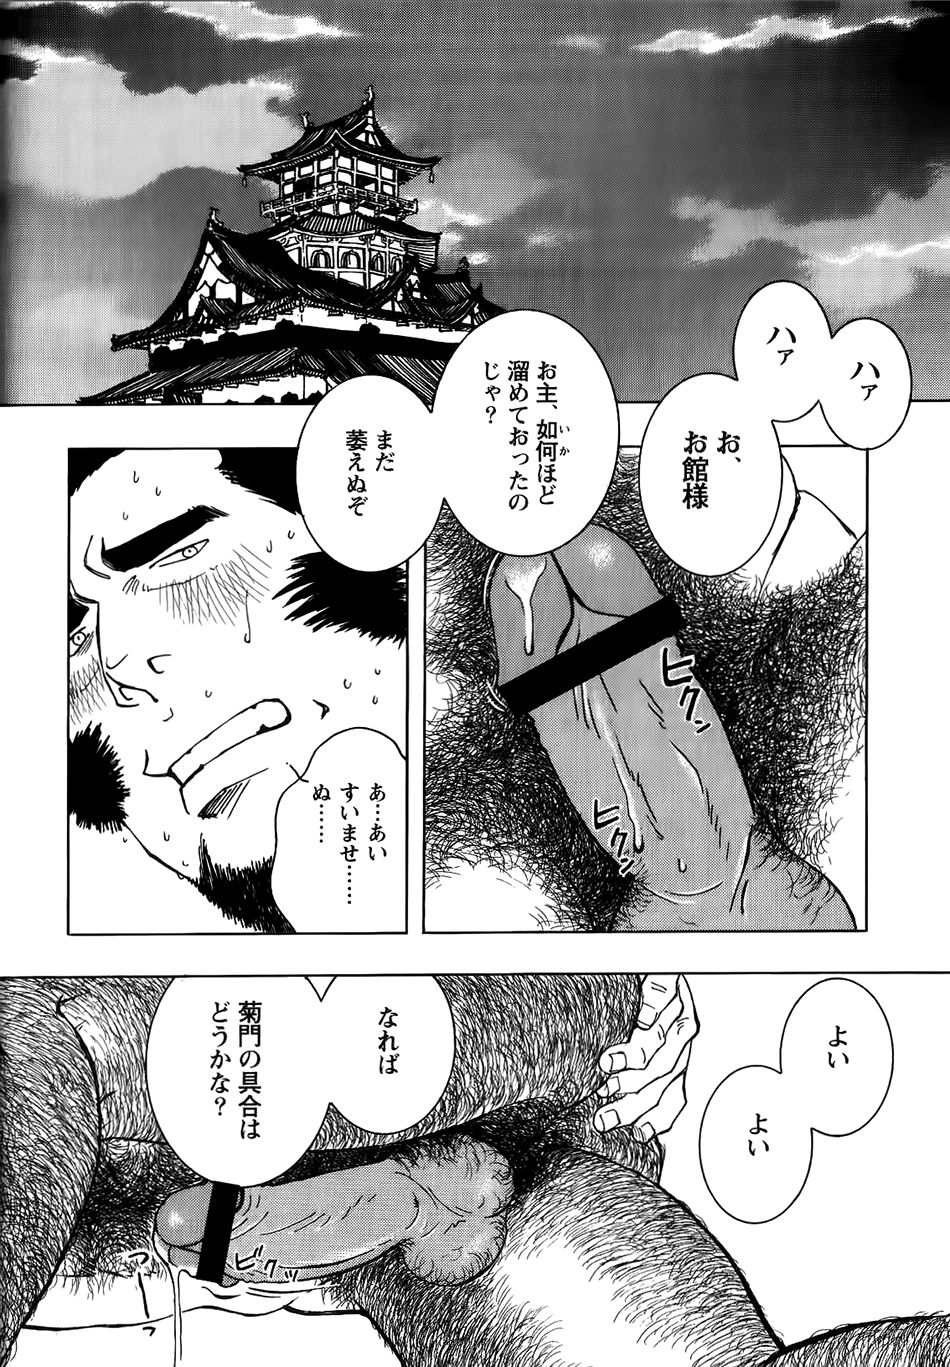 [Zin] Nobunaga's lotion man [RAW] [JAP] 